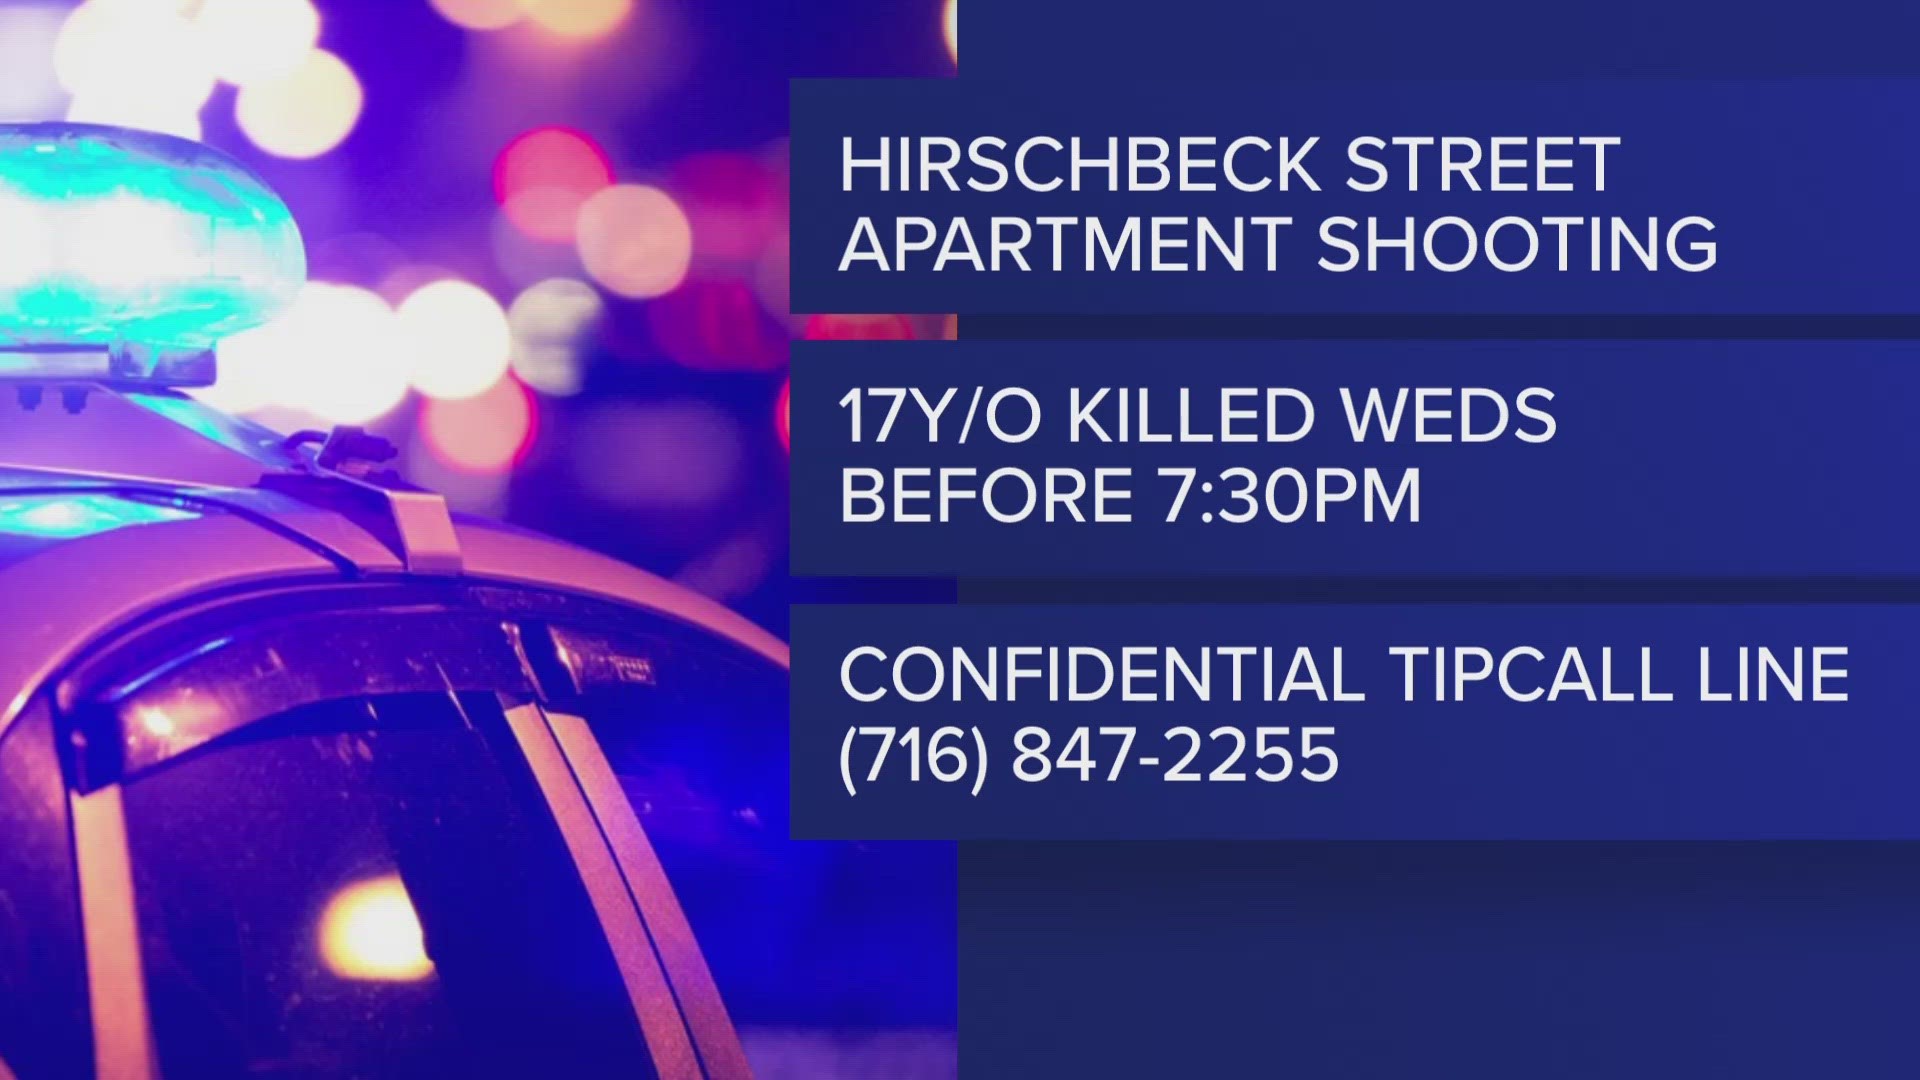 Buffalo teen killed in an apartment on Hirschbeck Street